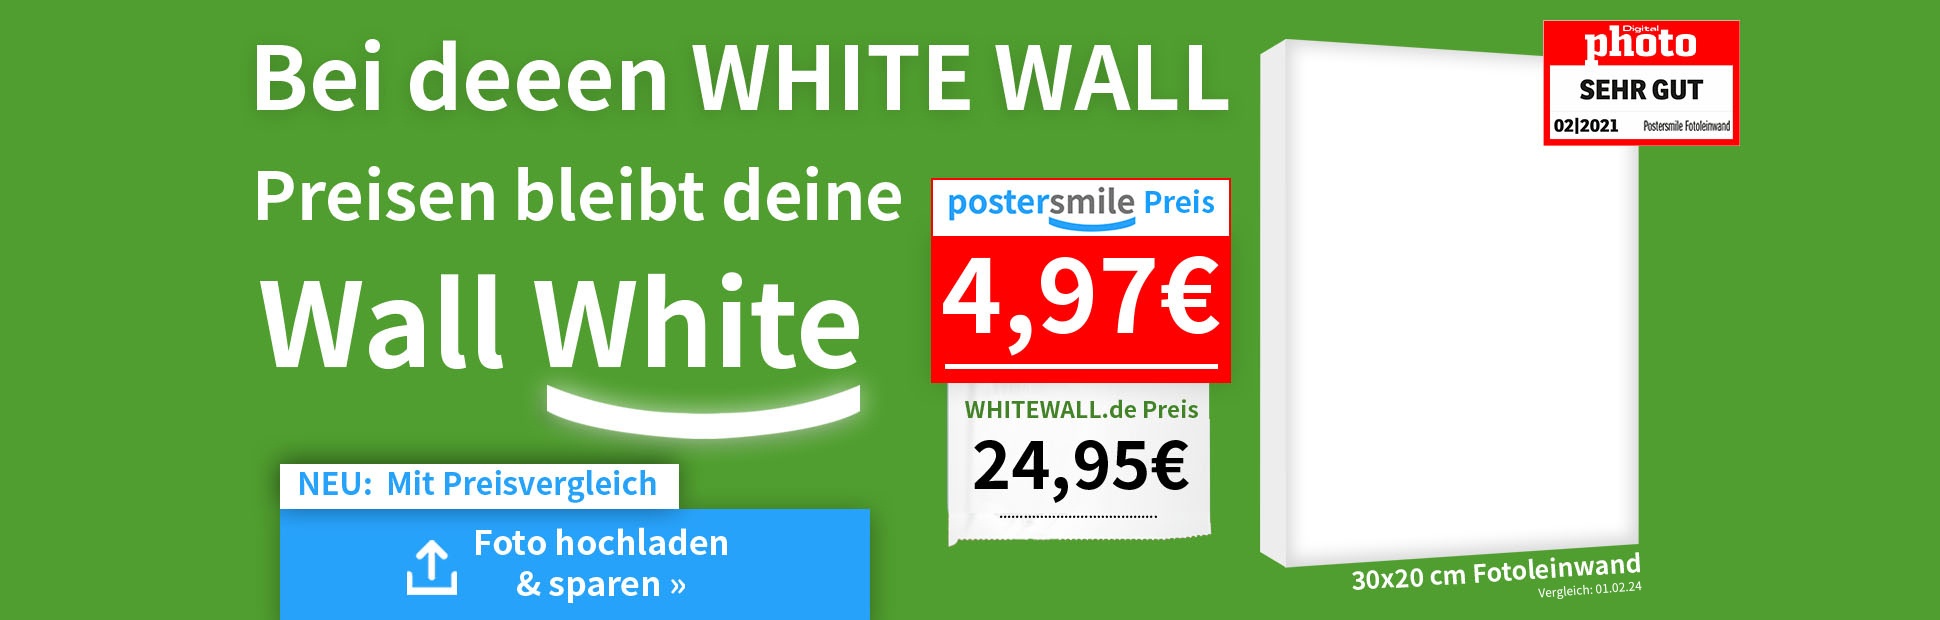 Fotoleinwand günstig - Foto auf Leinwand Preisvergleich postersmile.de vs. whitewall.de